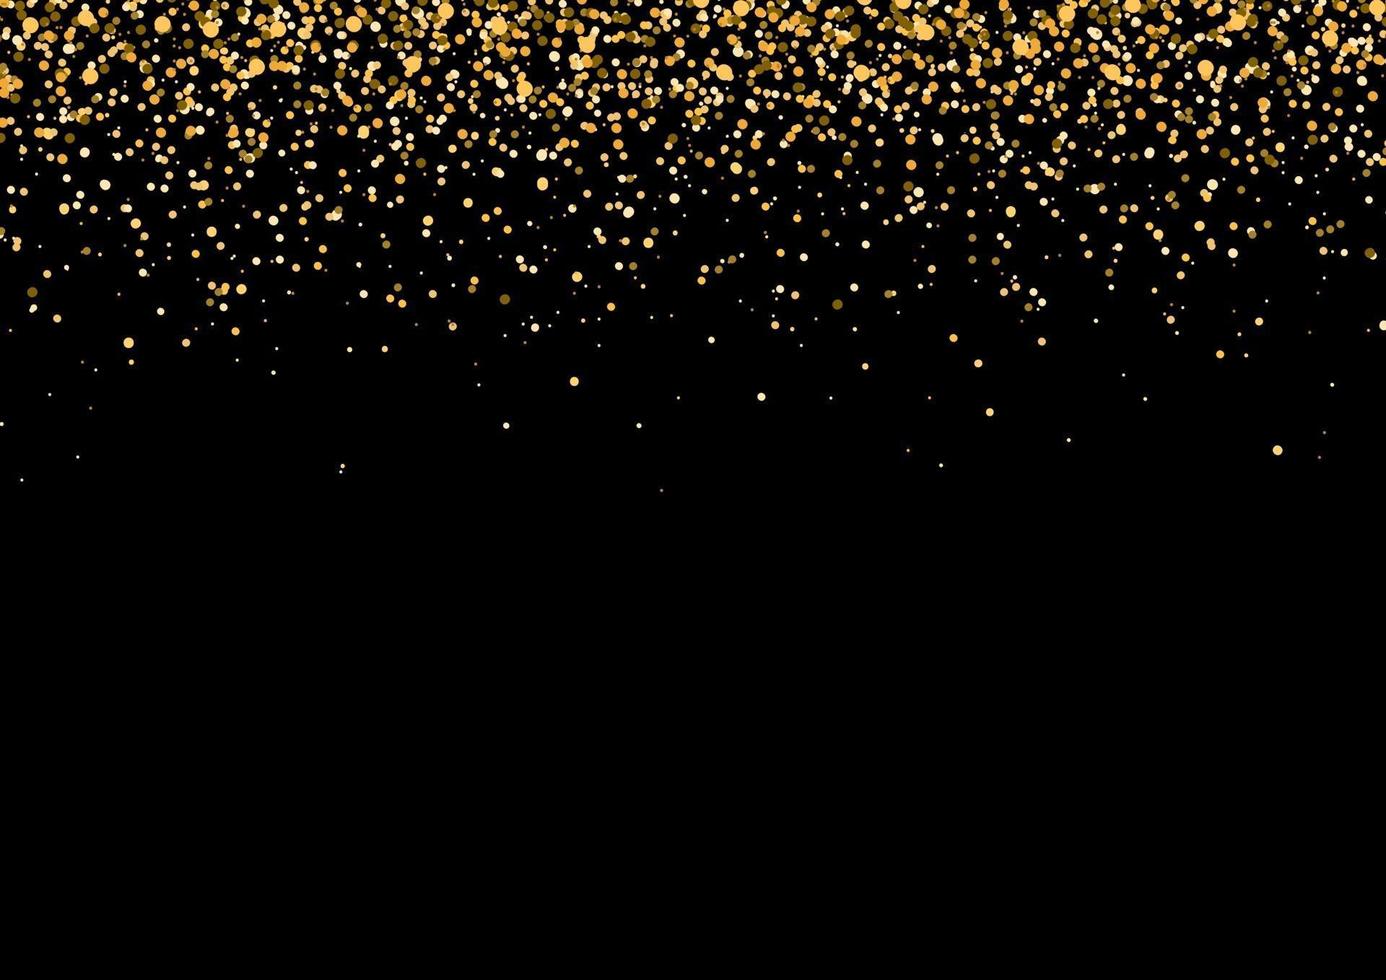 Gold Falling Glitter Celebration Party Background vector